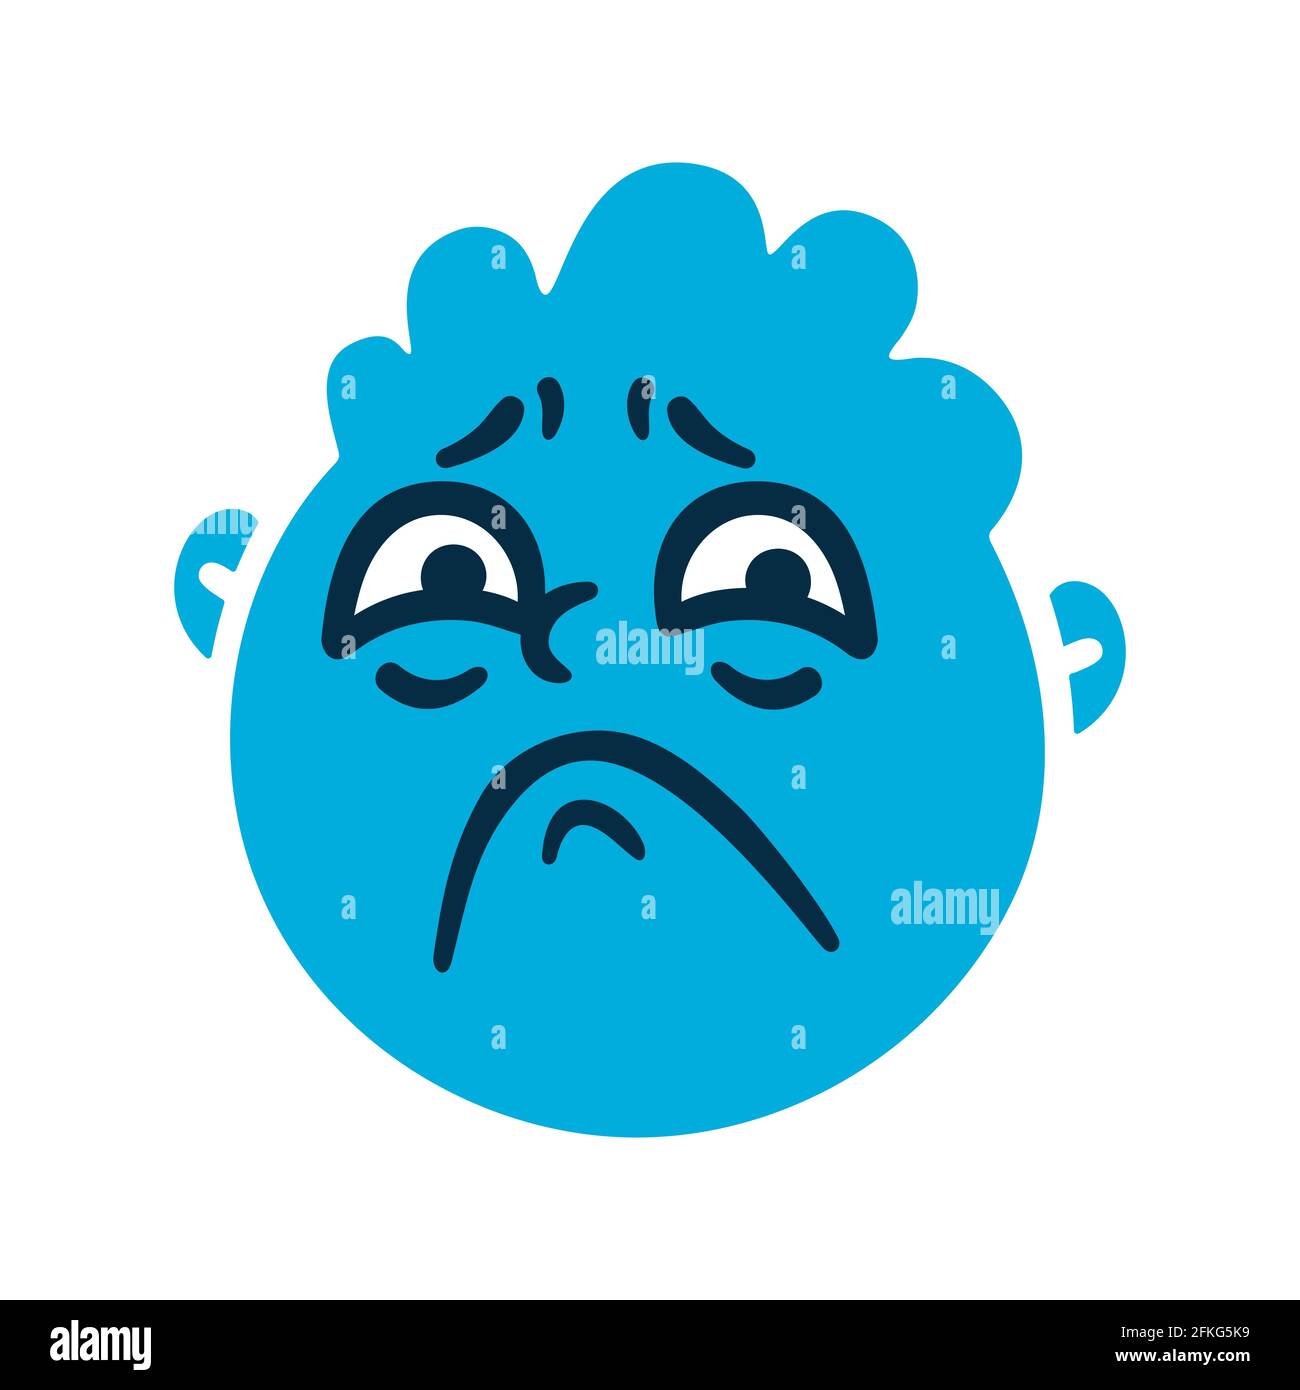 Round abstract face with sad emotions. Sorrow emoji avatar. Portrait of an upset man. Cartoon style. Flat design vector illustration. Stock Vector